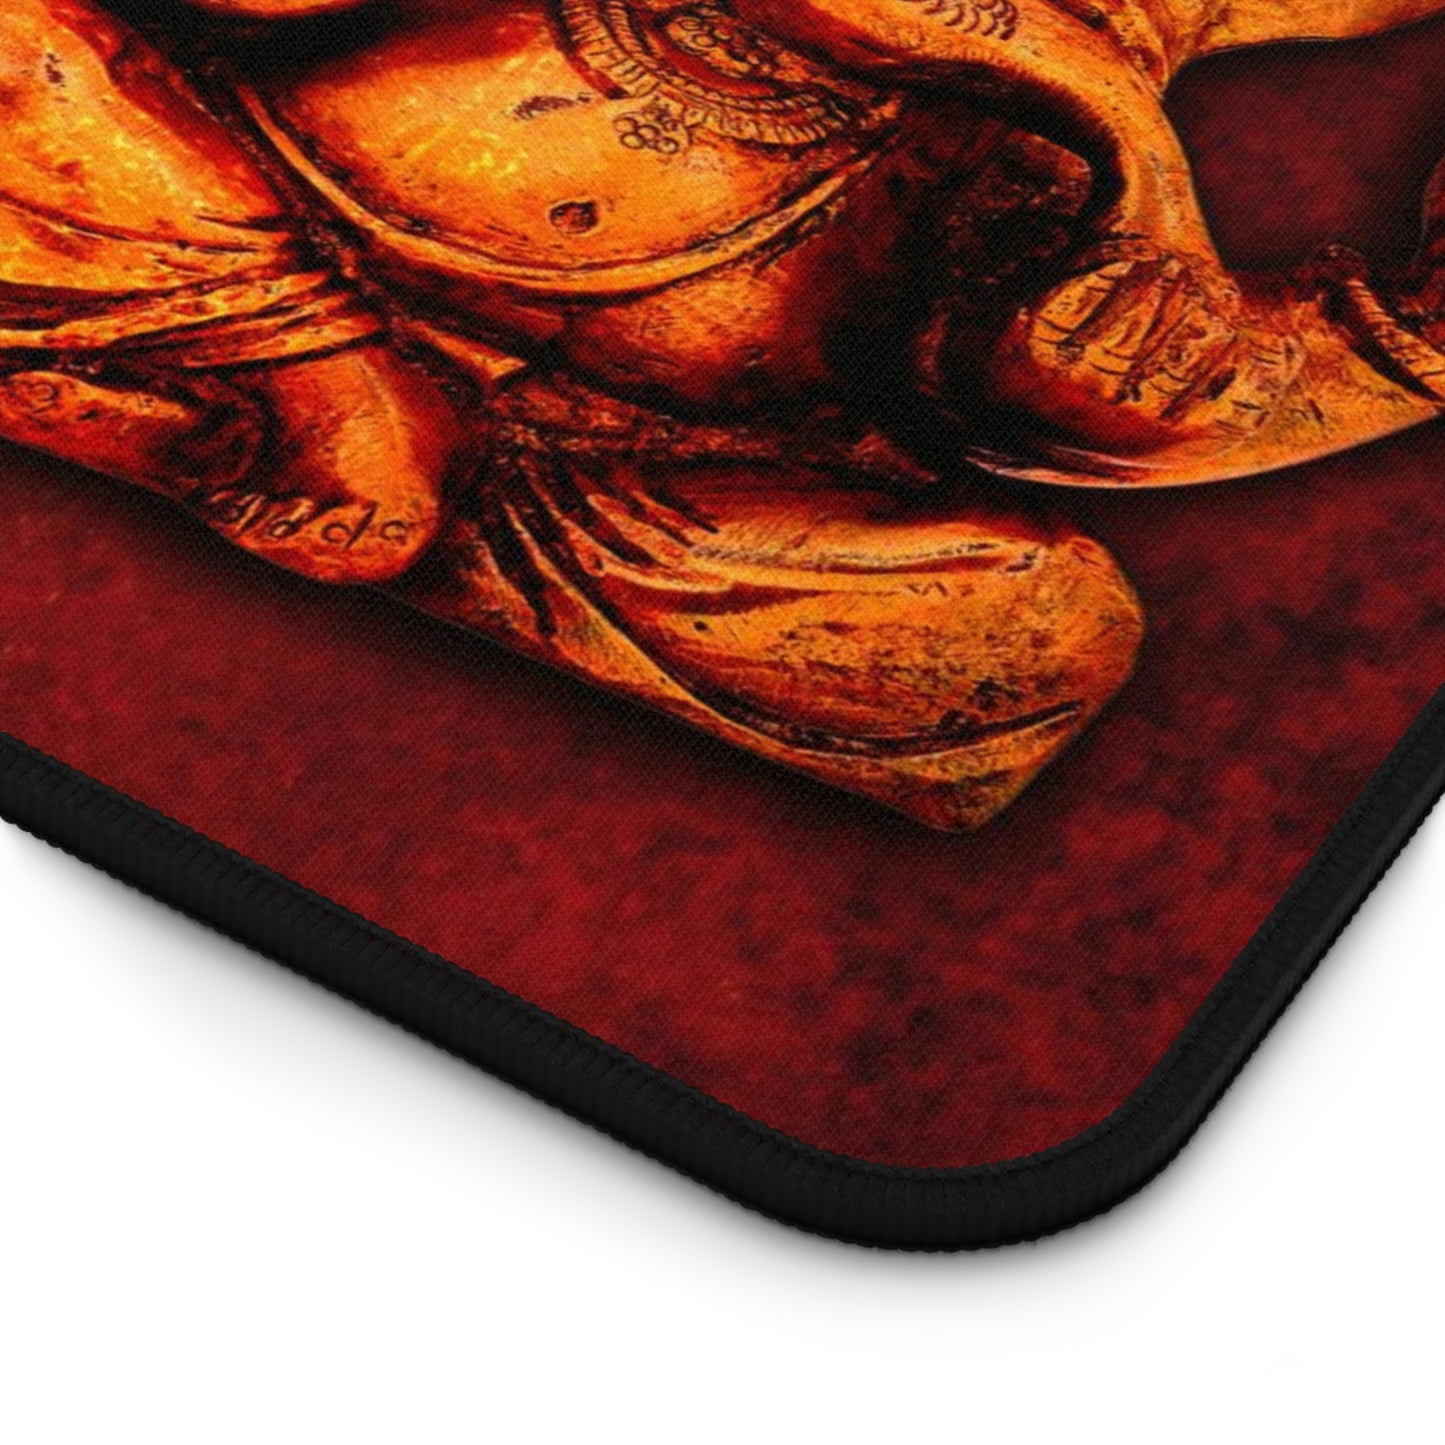 Gold Ganesha on Lava Red Background Print on Neoprene Desk Mat close up